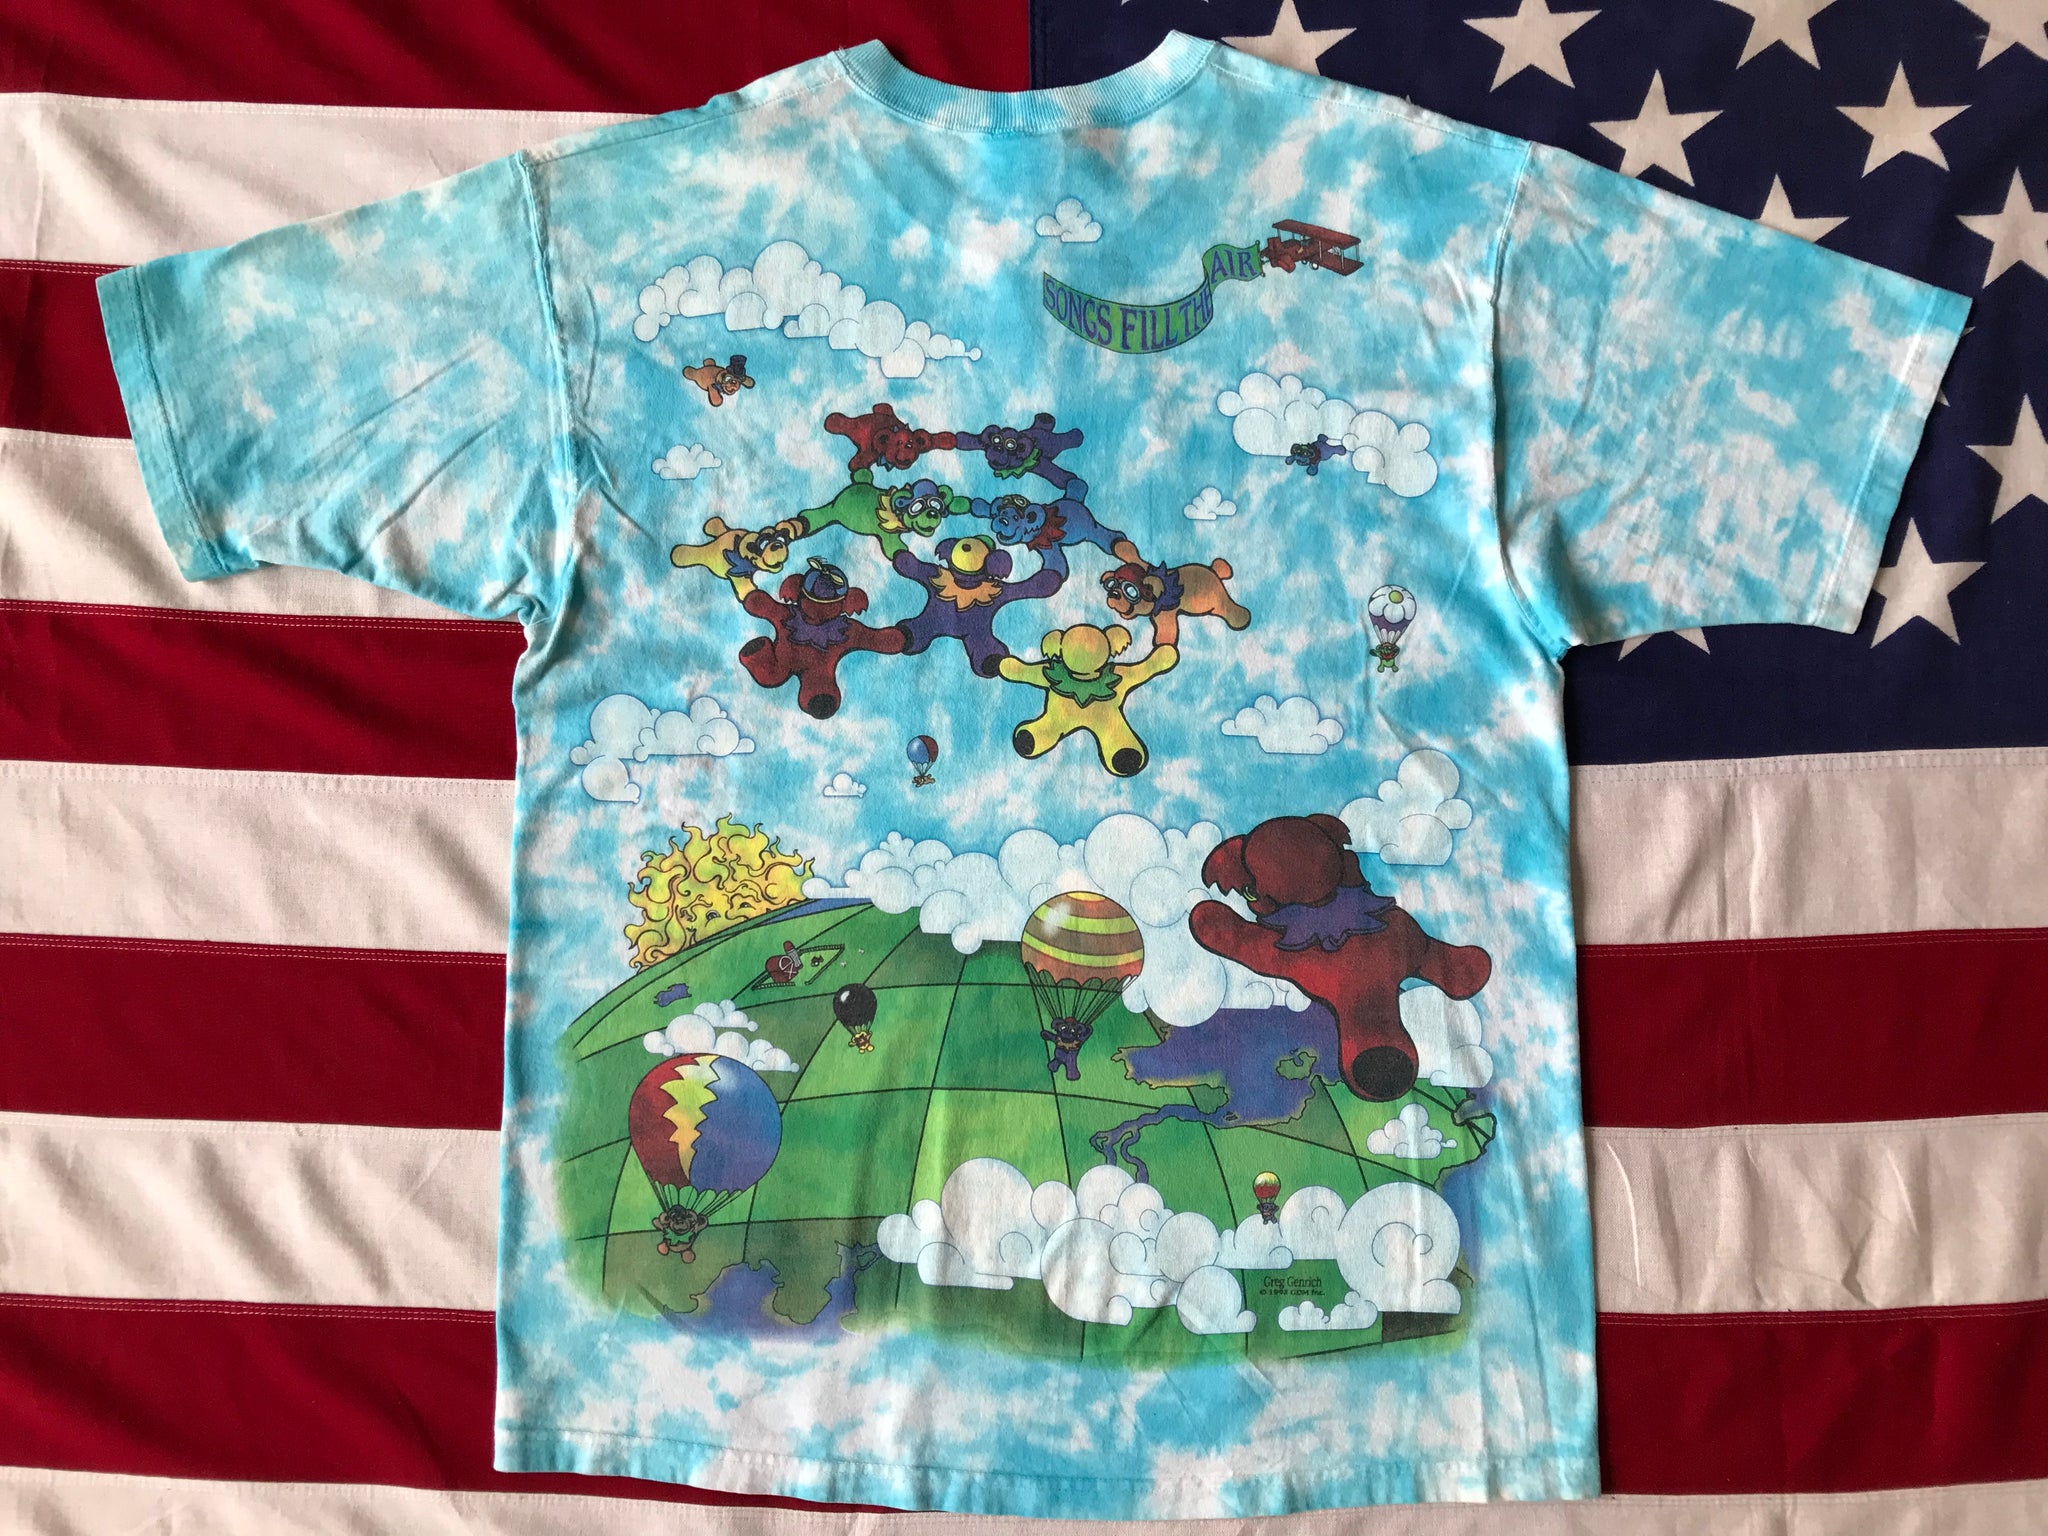 Grateful Dead - Greg Genrich “ Parachuting Bears 1993 “ Original Vintage Rock Tie Dye “ Songs Fill The Air “T-Shirt by Liquid Blue Made in USA